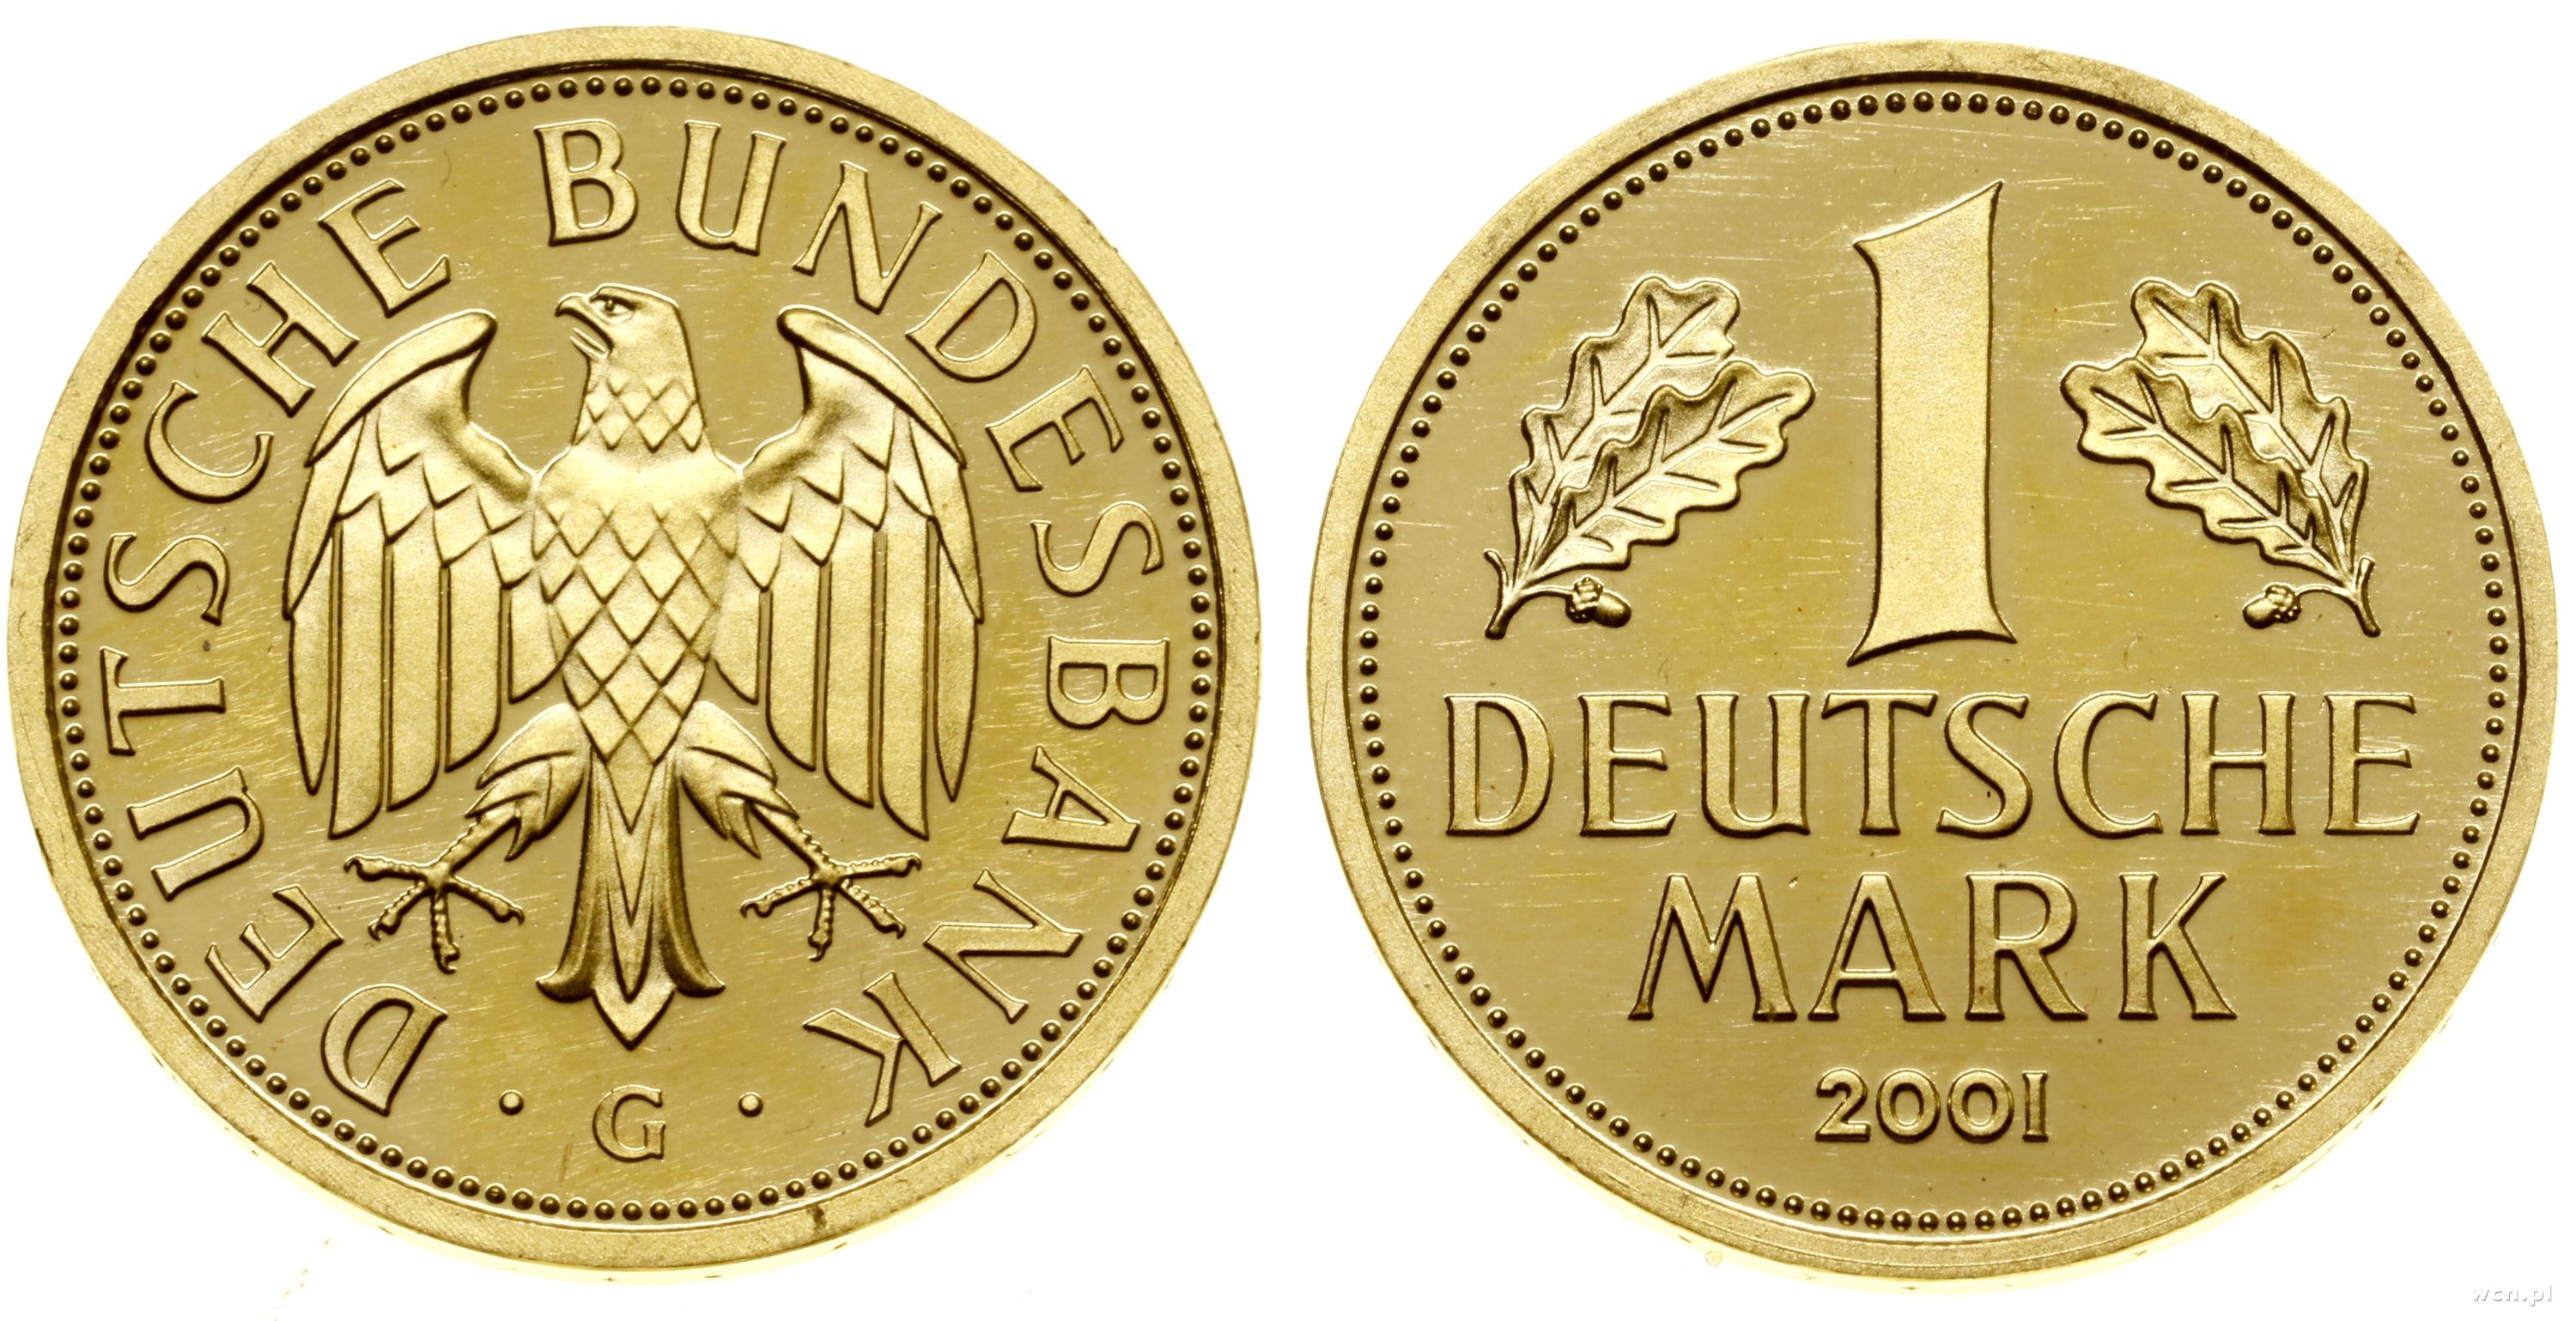 Deutsche mark. Немецкая марка. Валюта Германии марка. Золотая немецкая марка. Монеты на марках.